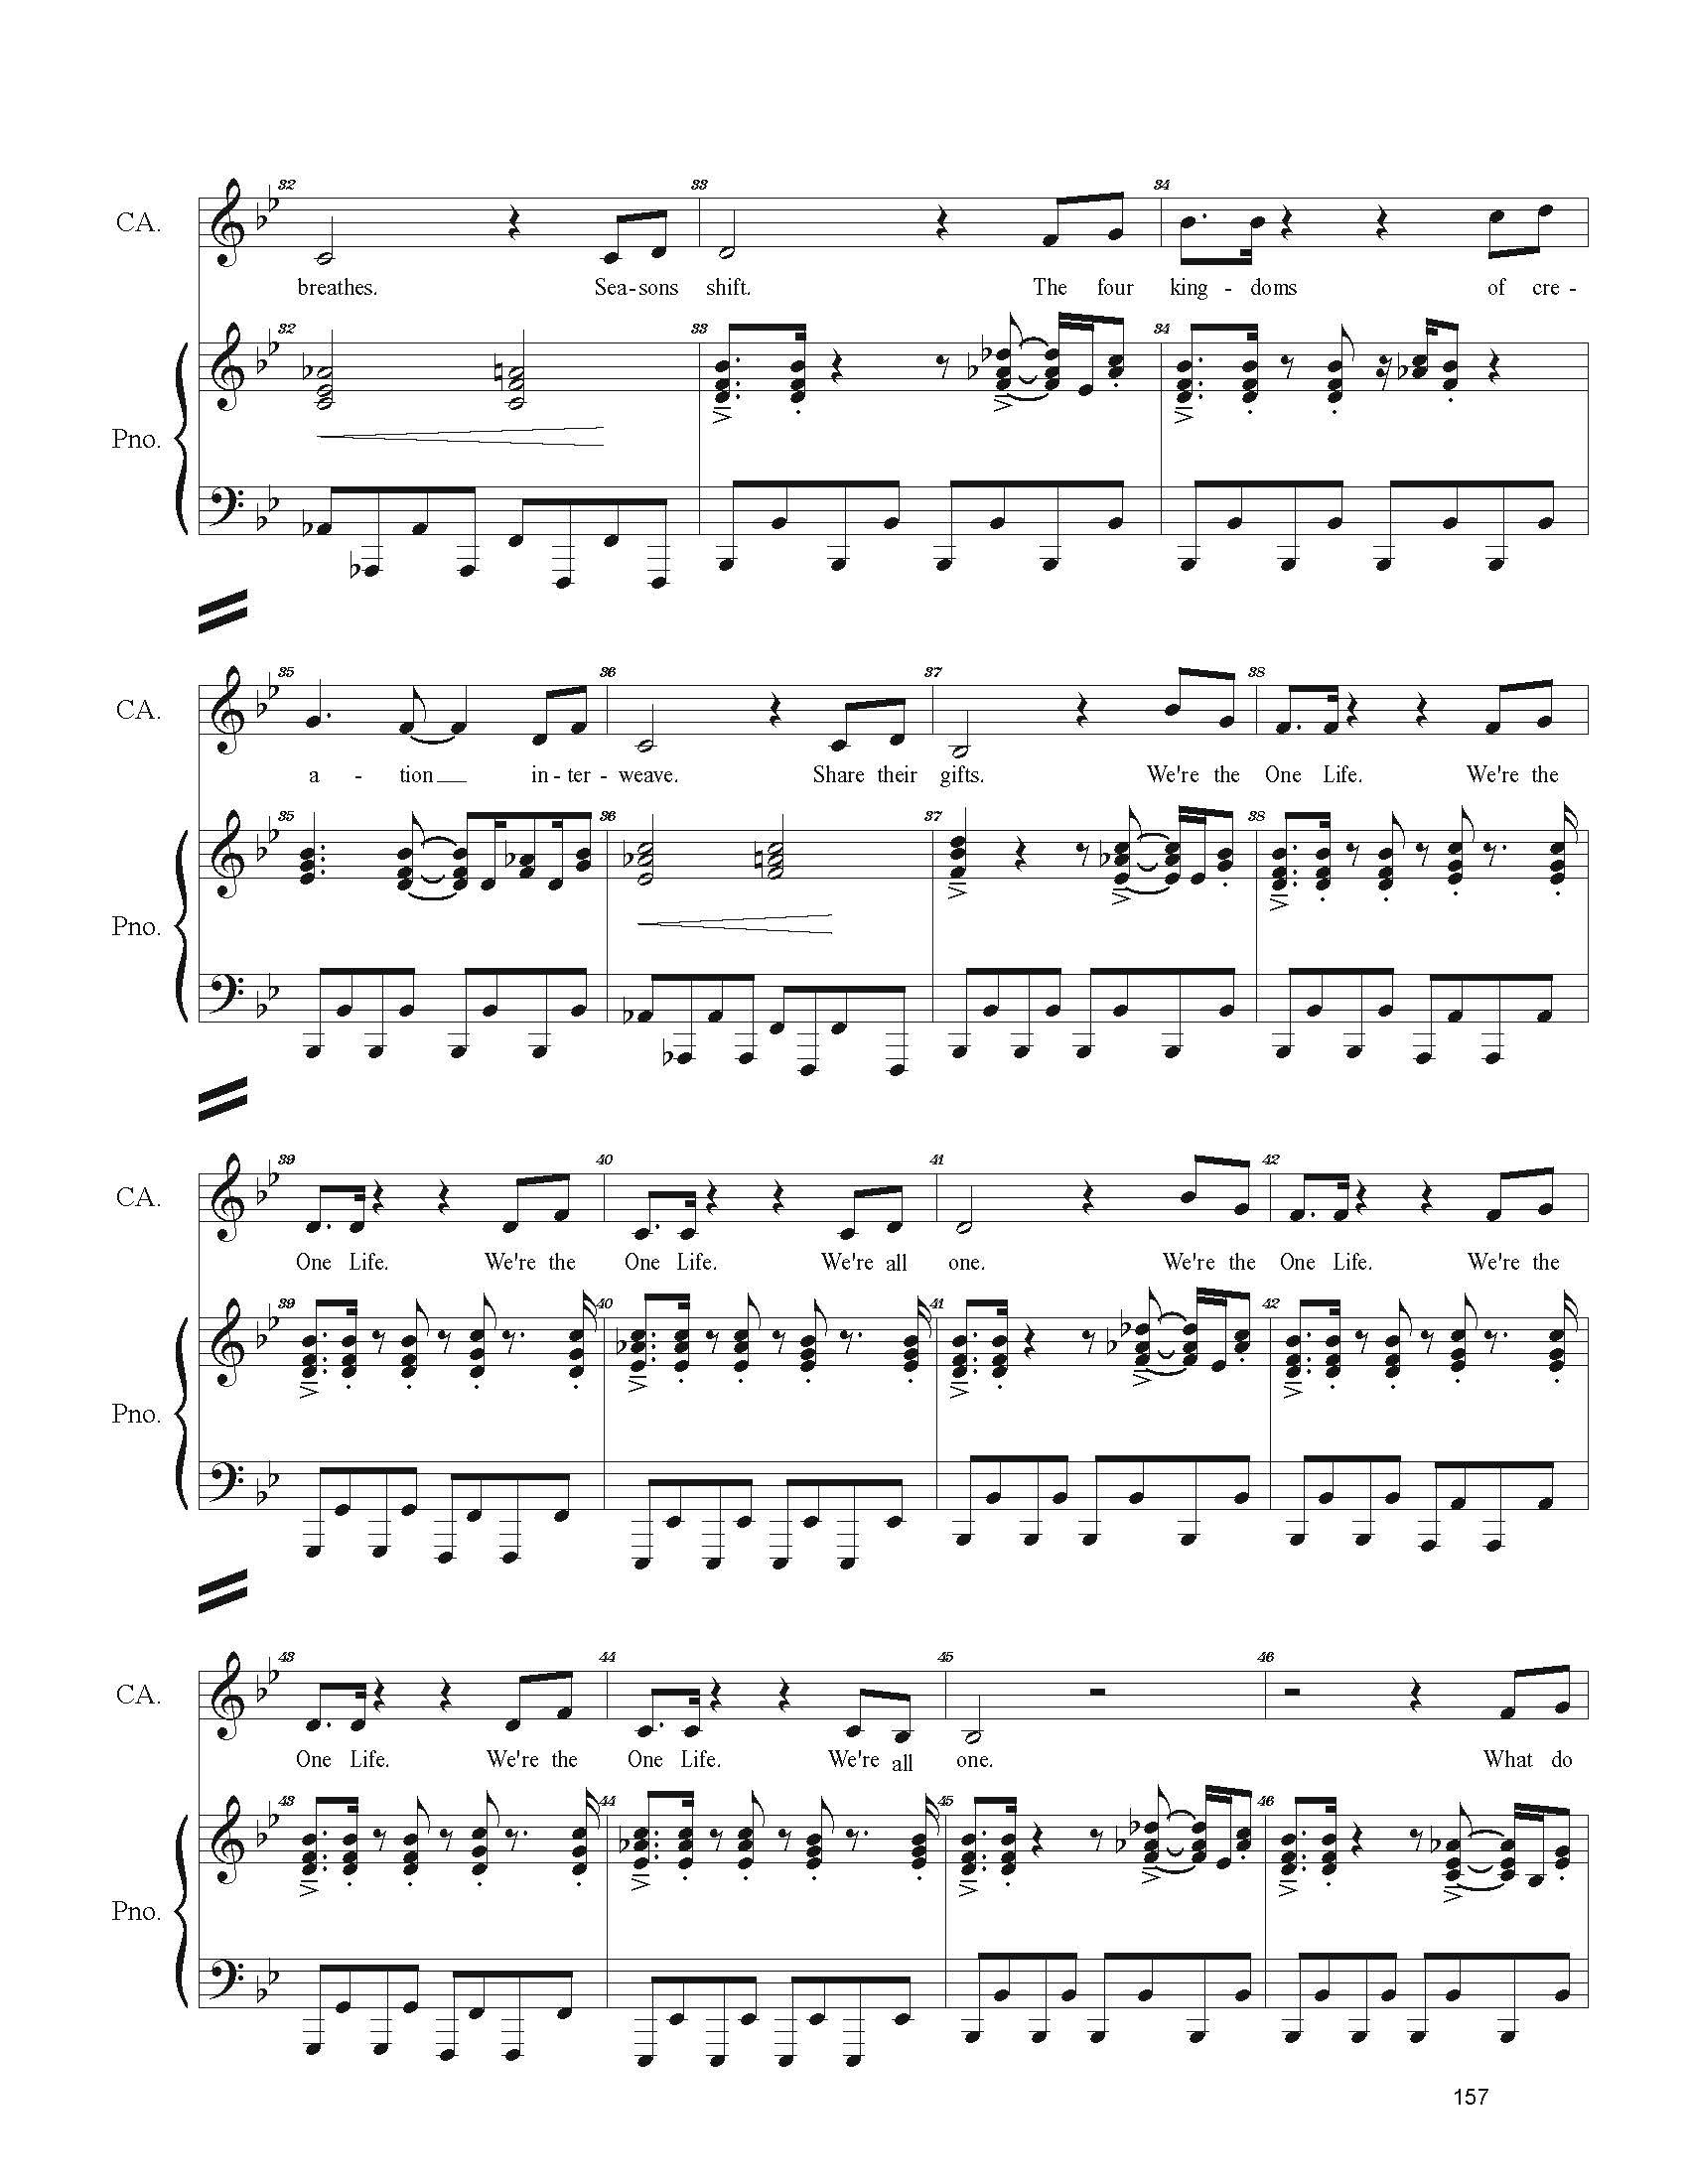 FULL PIANO VOCAL SCORE DRAFT 1 - Score_Page_157.jpg